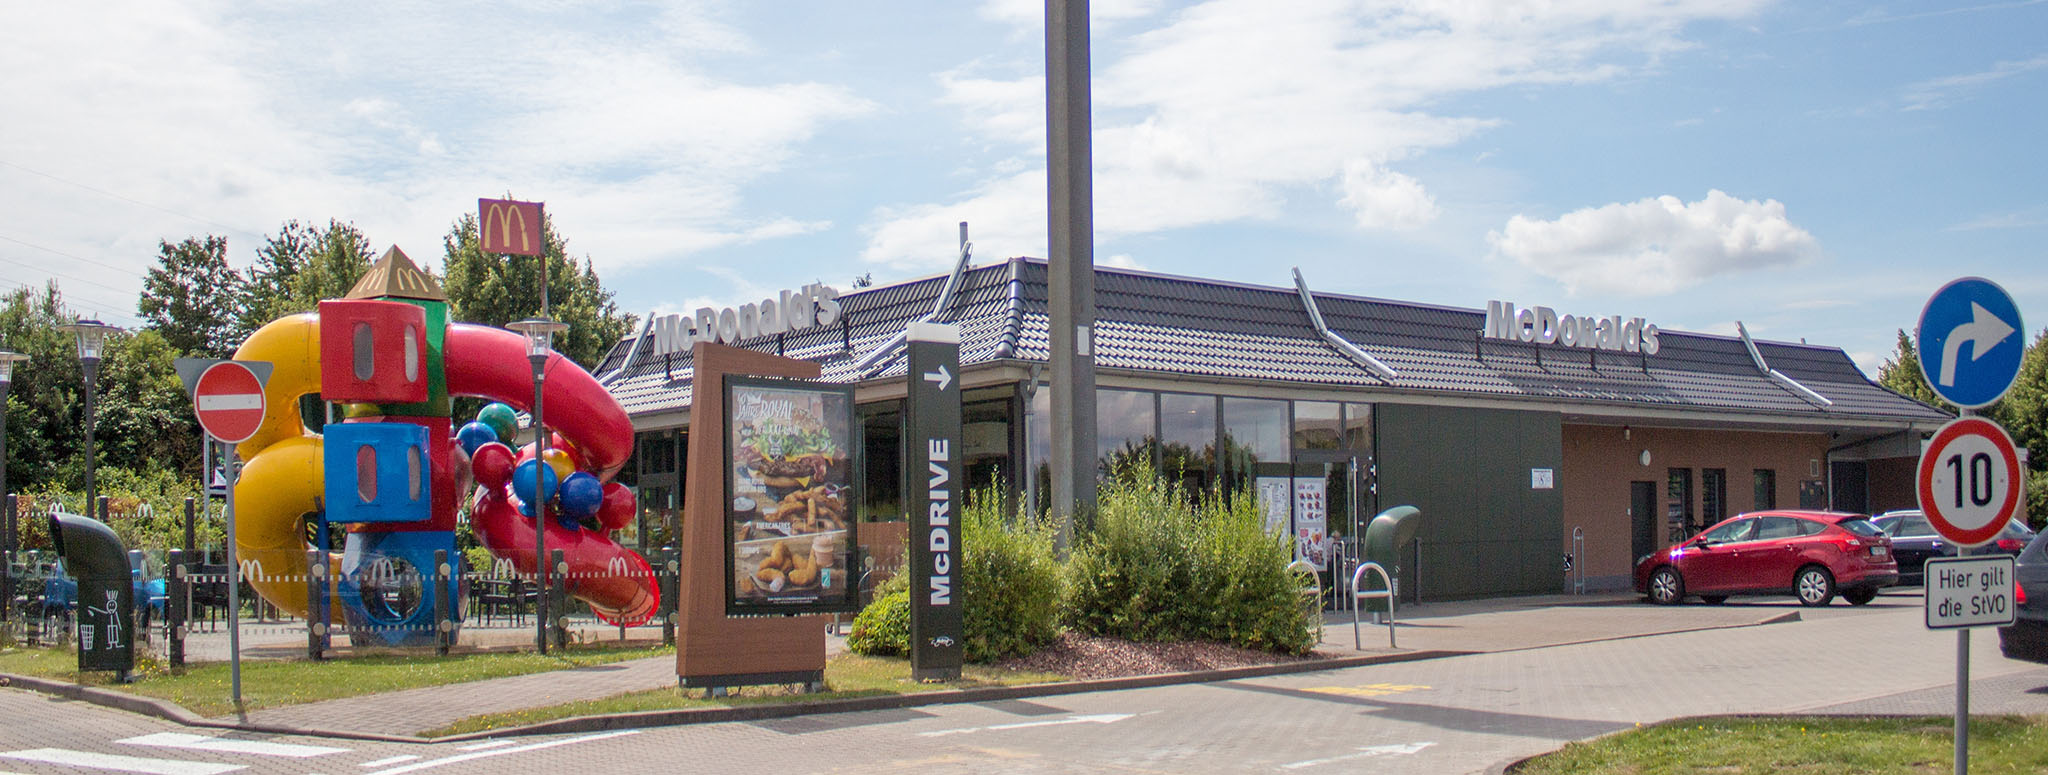 Das McDonald’s-Restaurant in Giesen-Emmerke